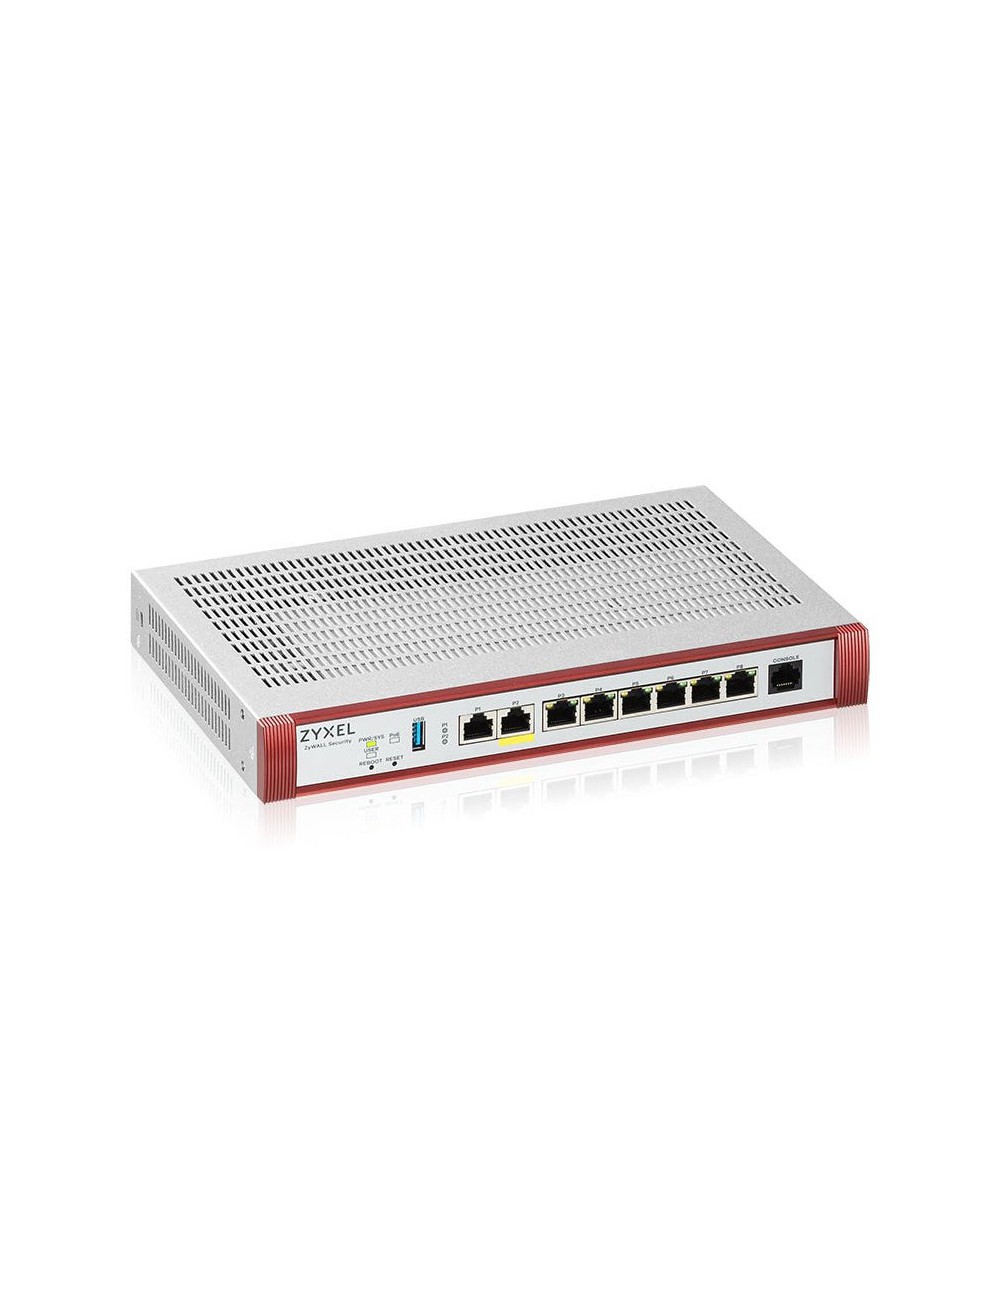 Zyxel USG Flex 100HP firewall (hardware) 3 Gbit s